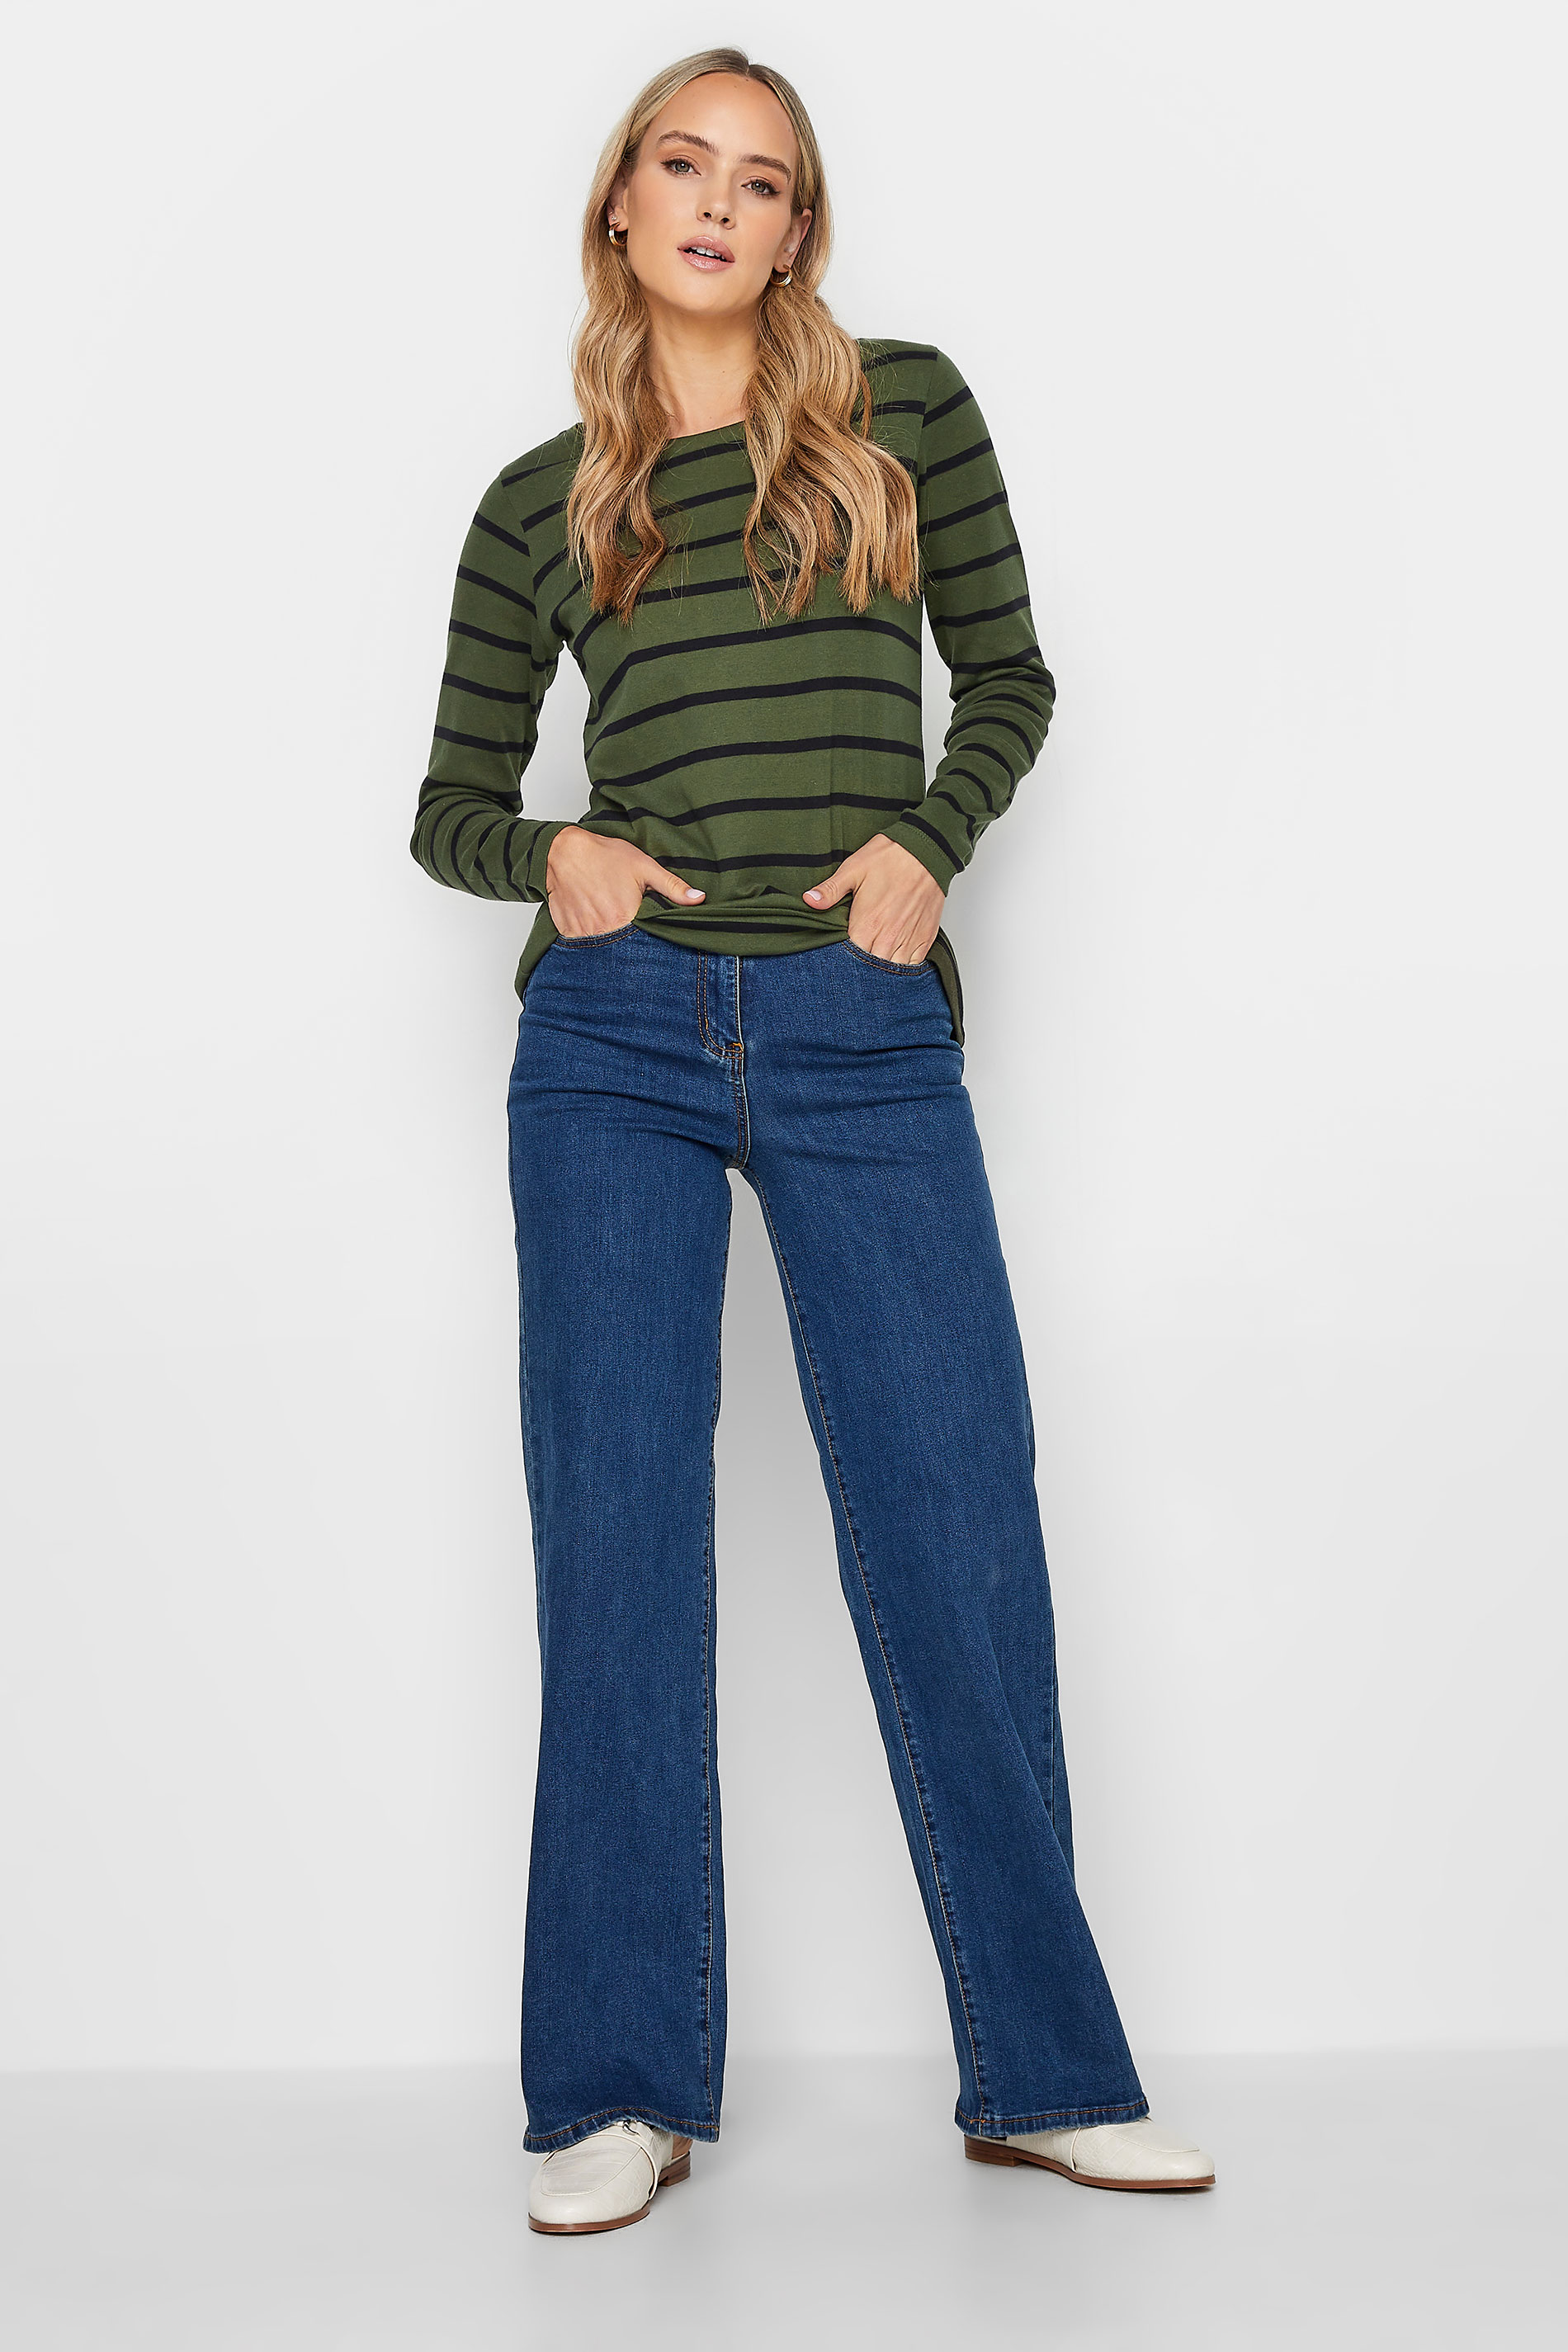 LTS Tall Women's Khaki Green Stripe Long Sleeve Cotton T-Shirt | Long Tall Sally 3